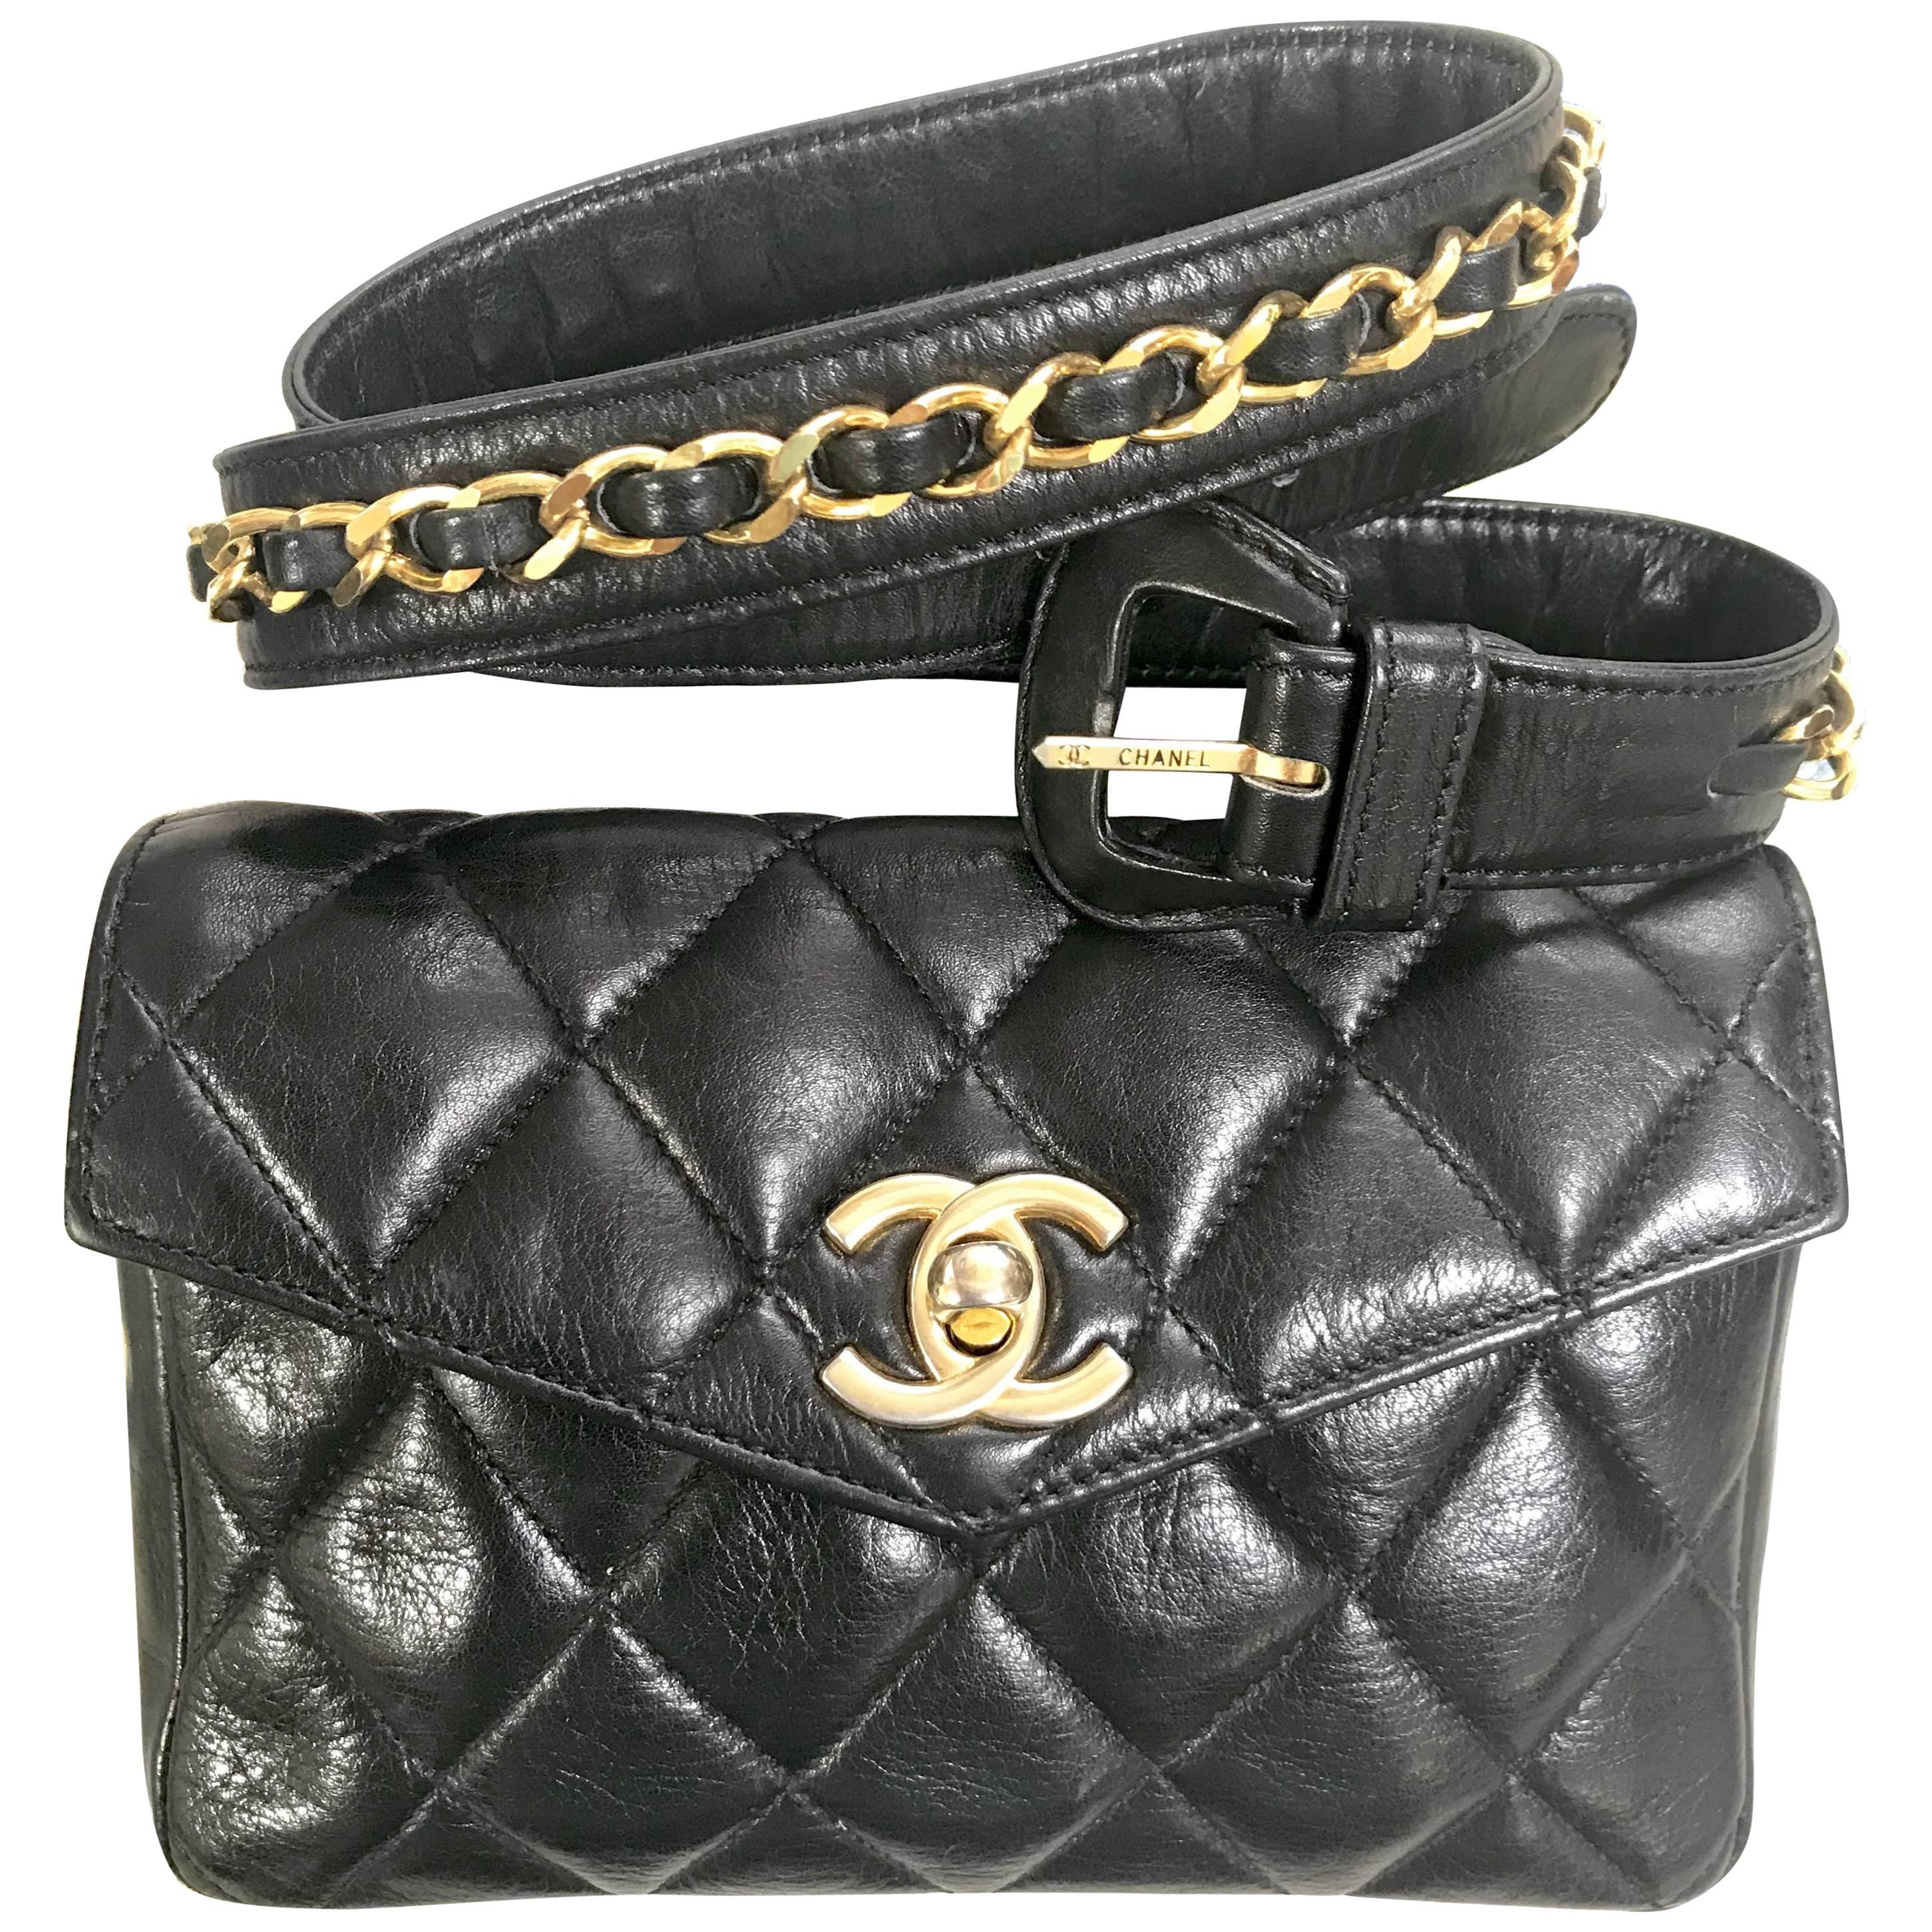 Vintage CHANEL black lamb belt bag, fanny pack with golden chain belt and CC.